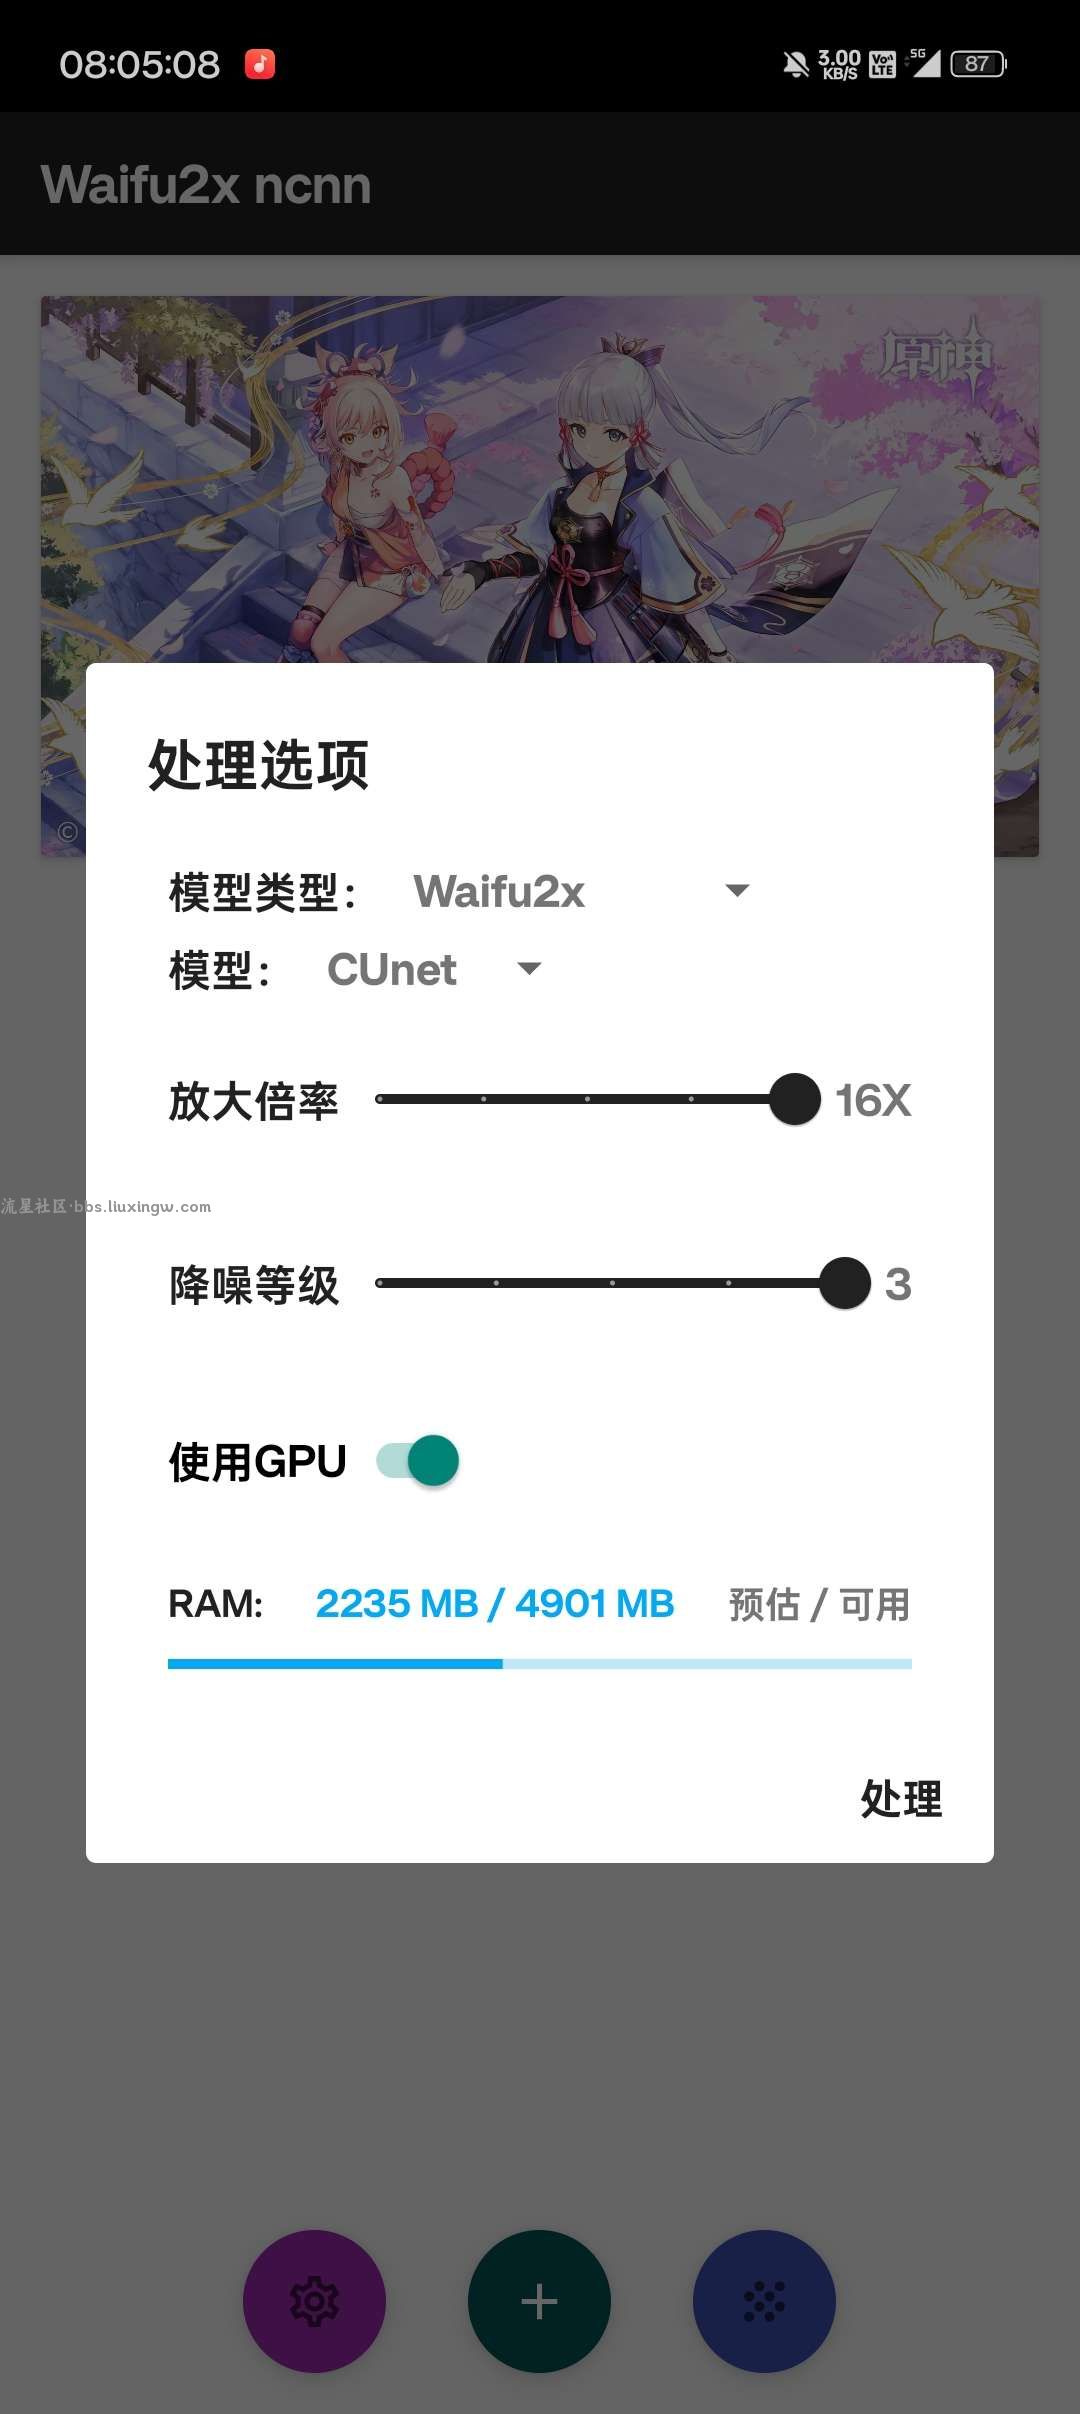 Waifu2x ncnn绿色版，一键放大图片增强图片画质